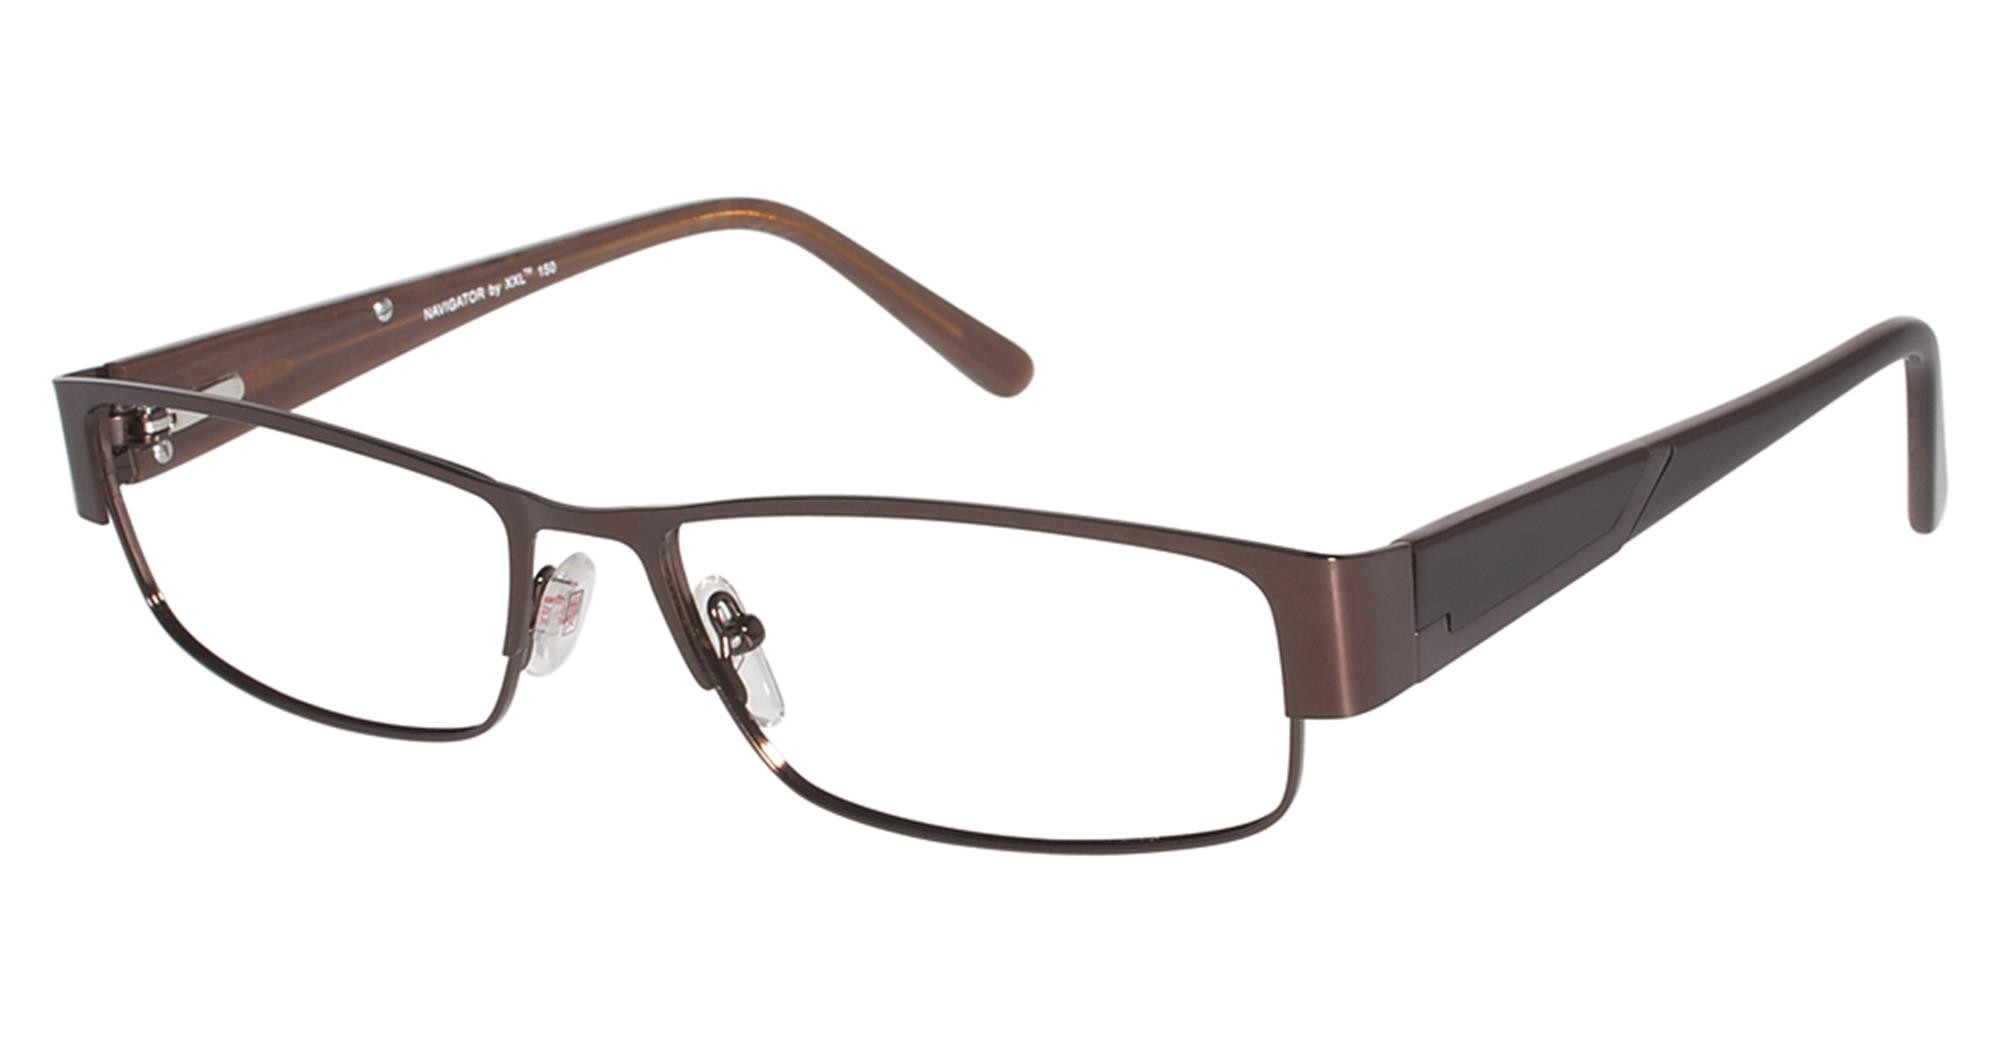 XXL NAVIGATOR Eyeglasses - XXL by Ron Jaworski Authorized Retailer ...